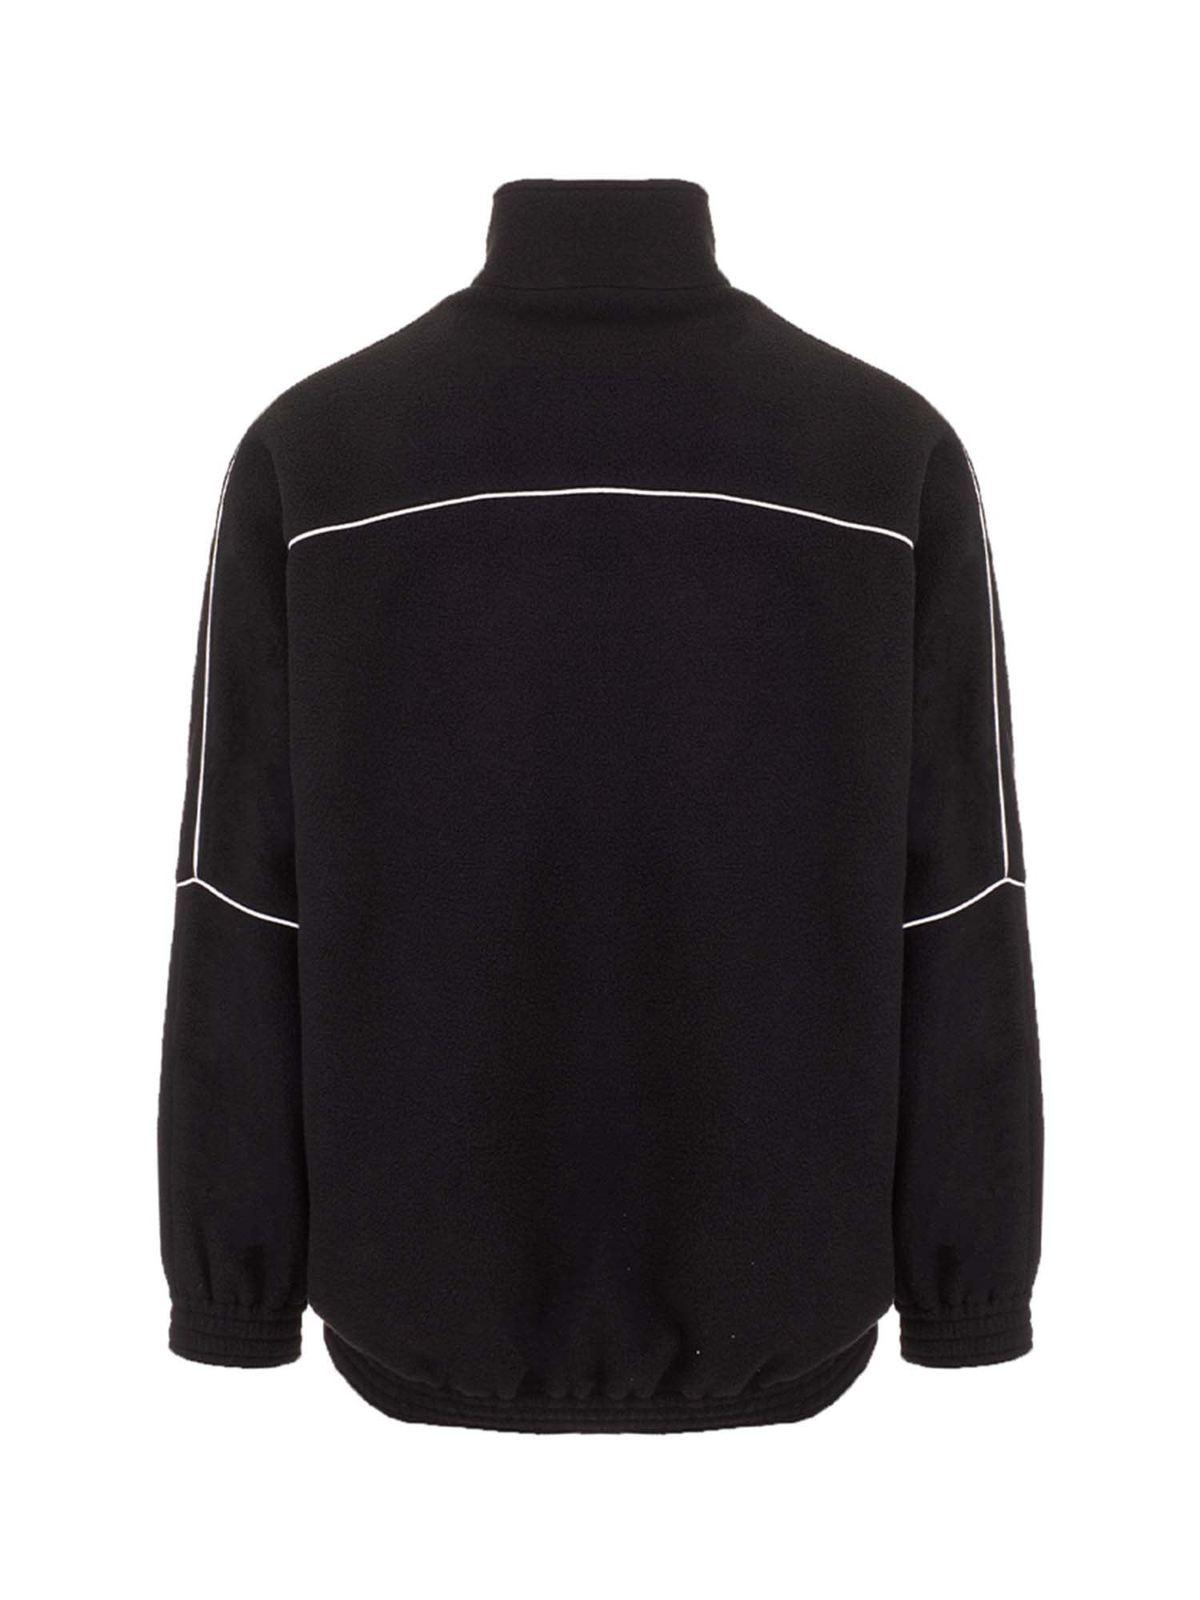 Balenciaga - Tracksuit jacket in black - casual jackets - 643053TJQ321000